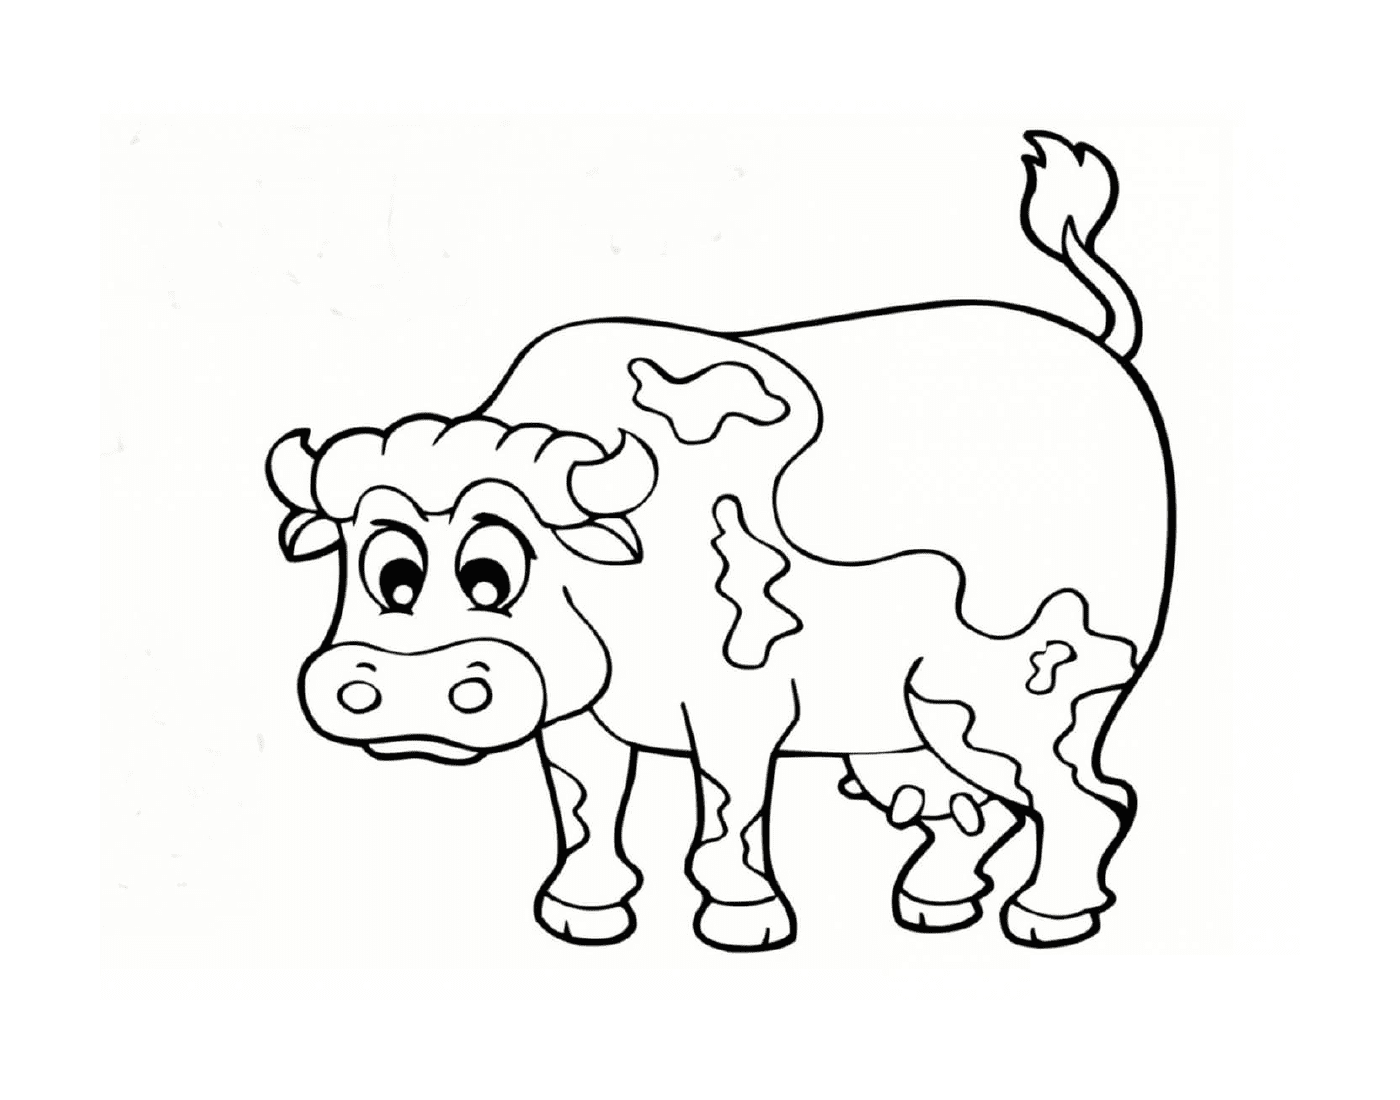  a cow 